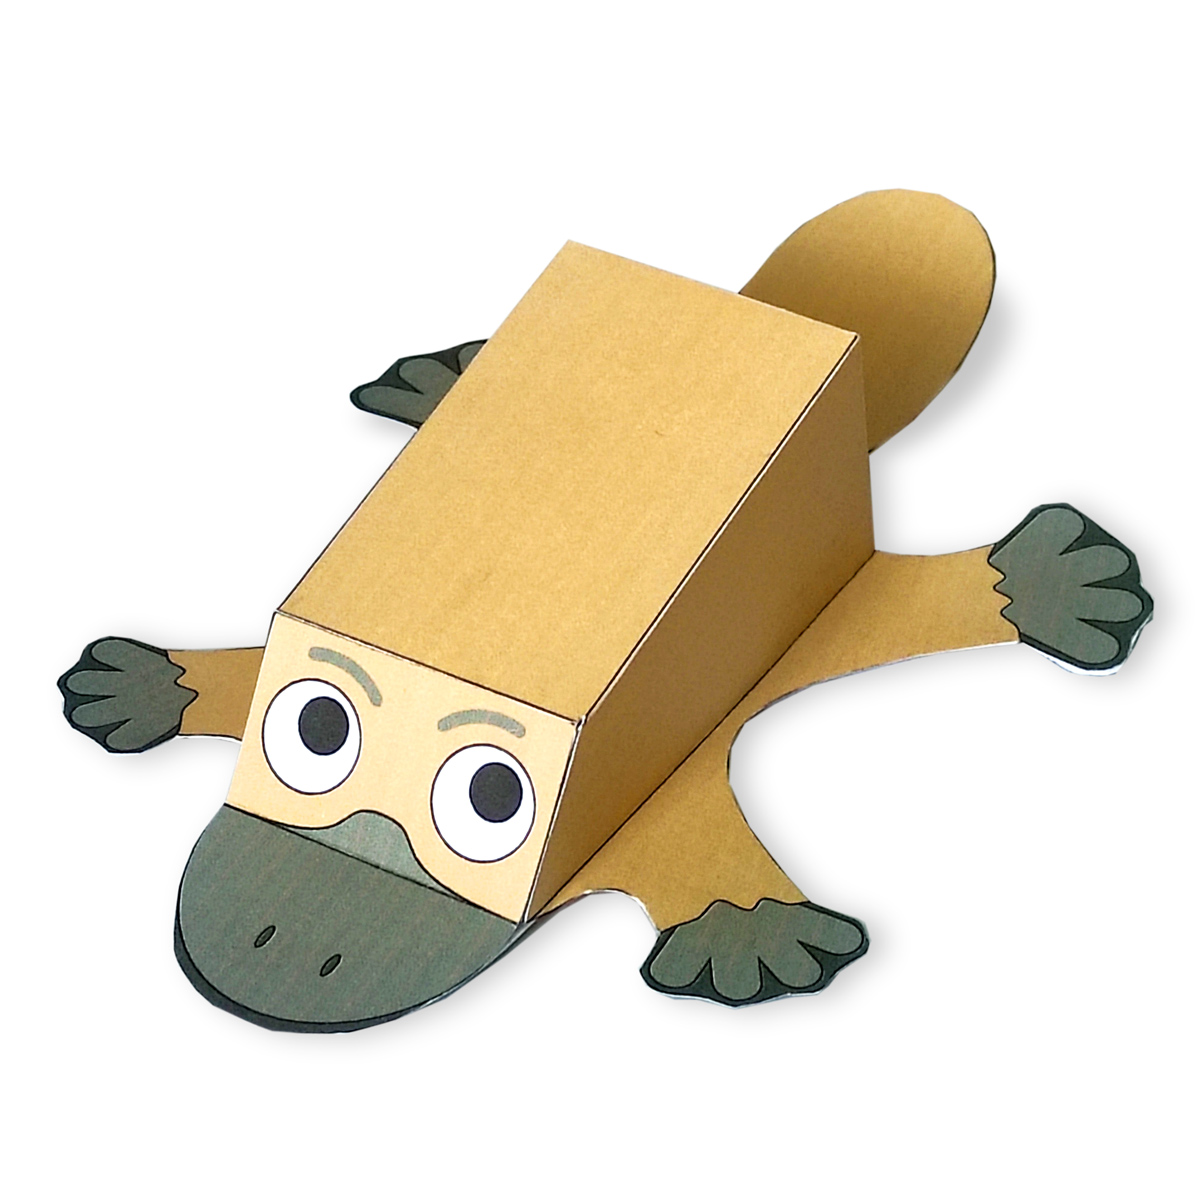 Platypus free printable paper model